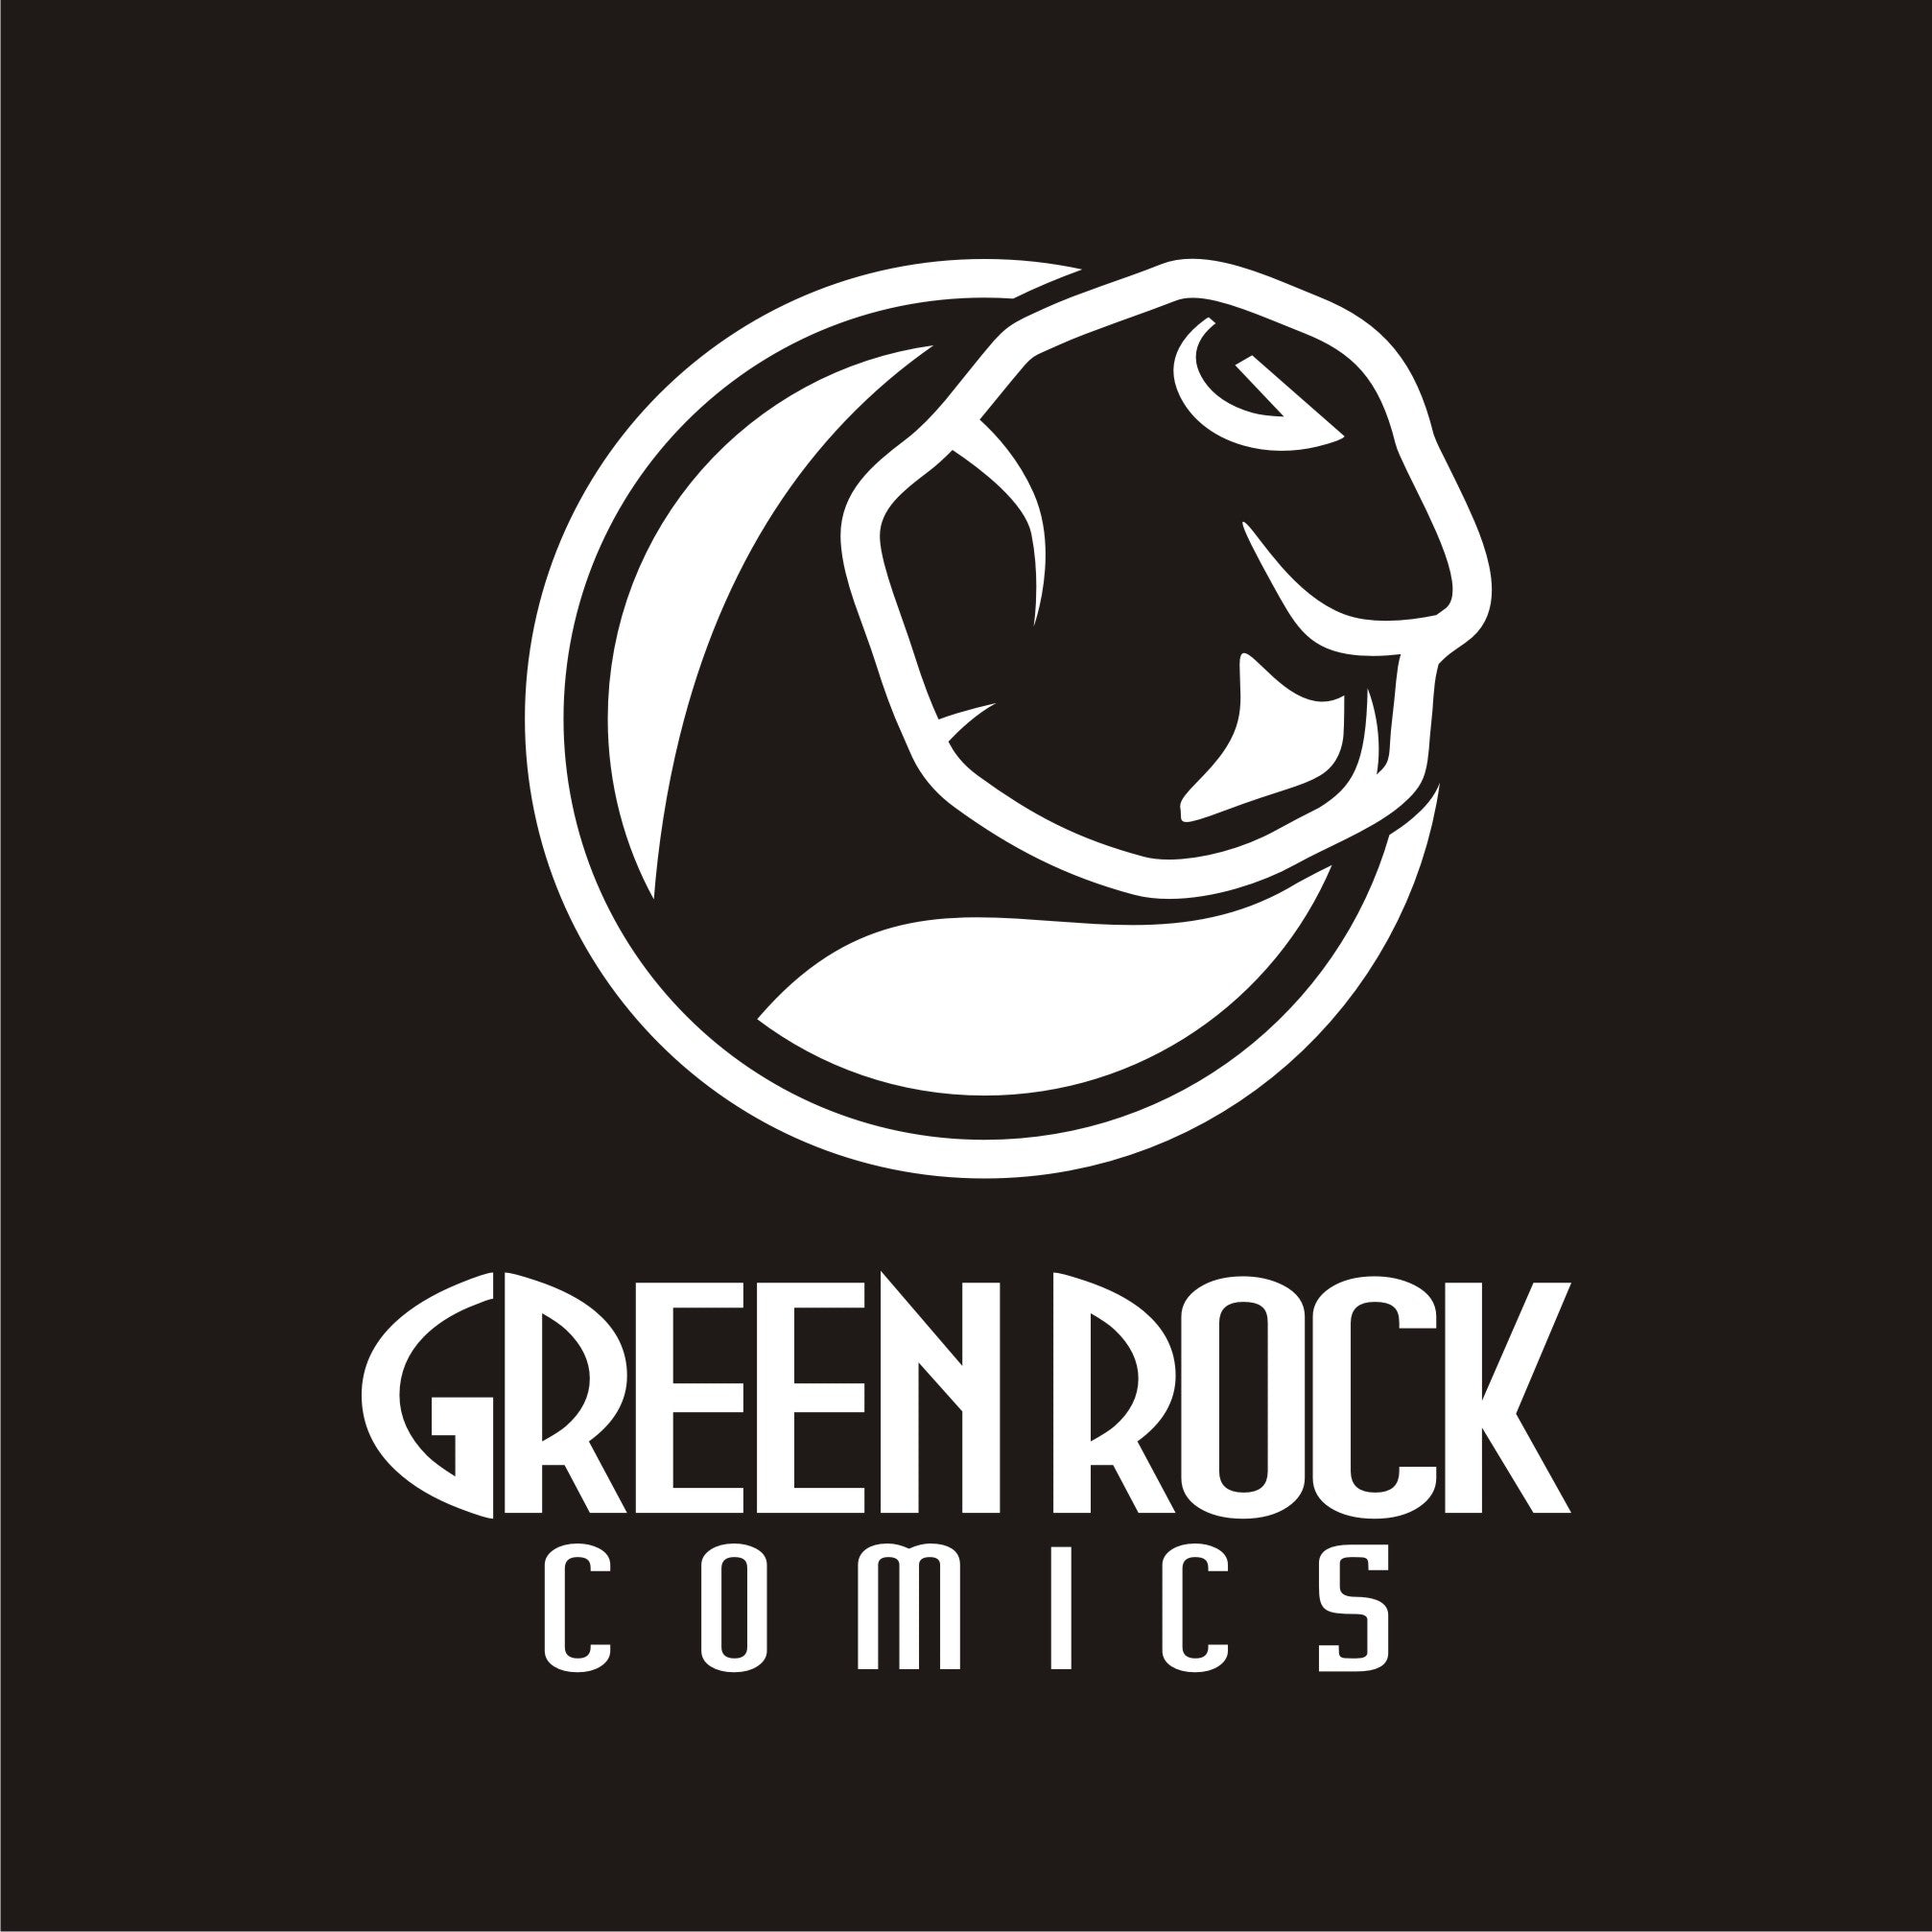 Green rock comics bw reversed